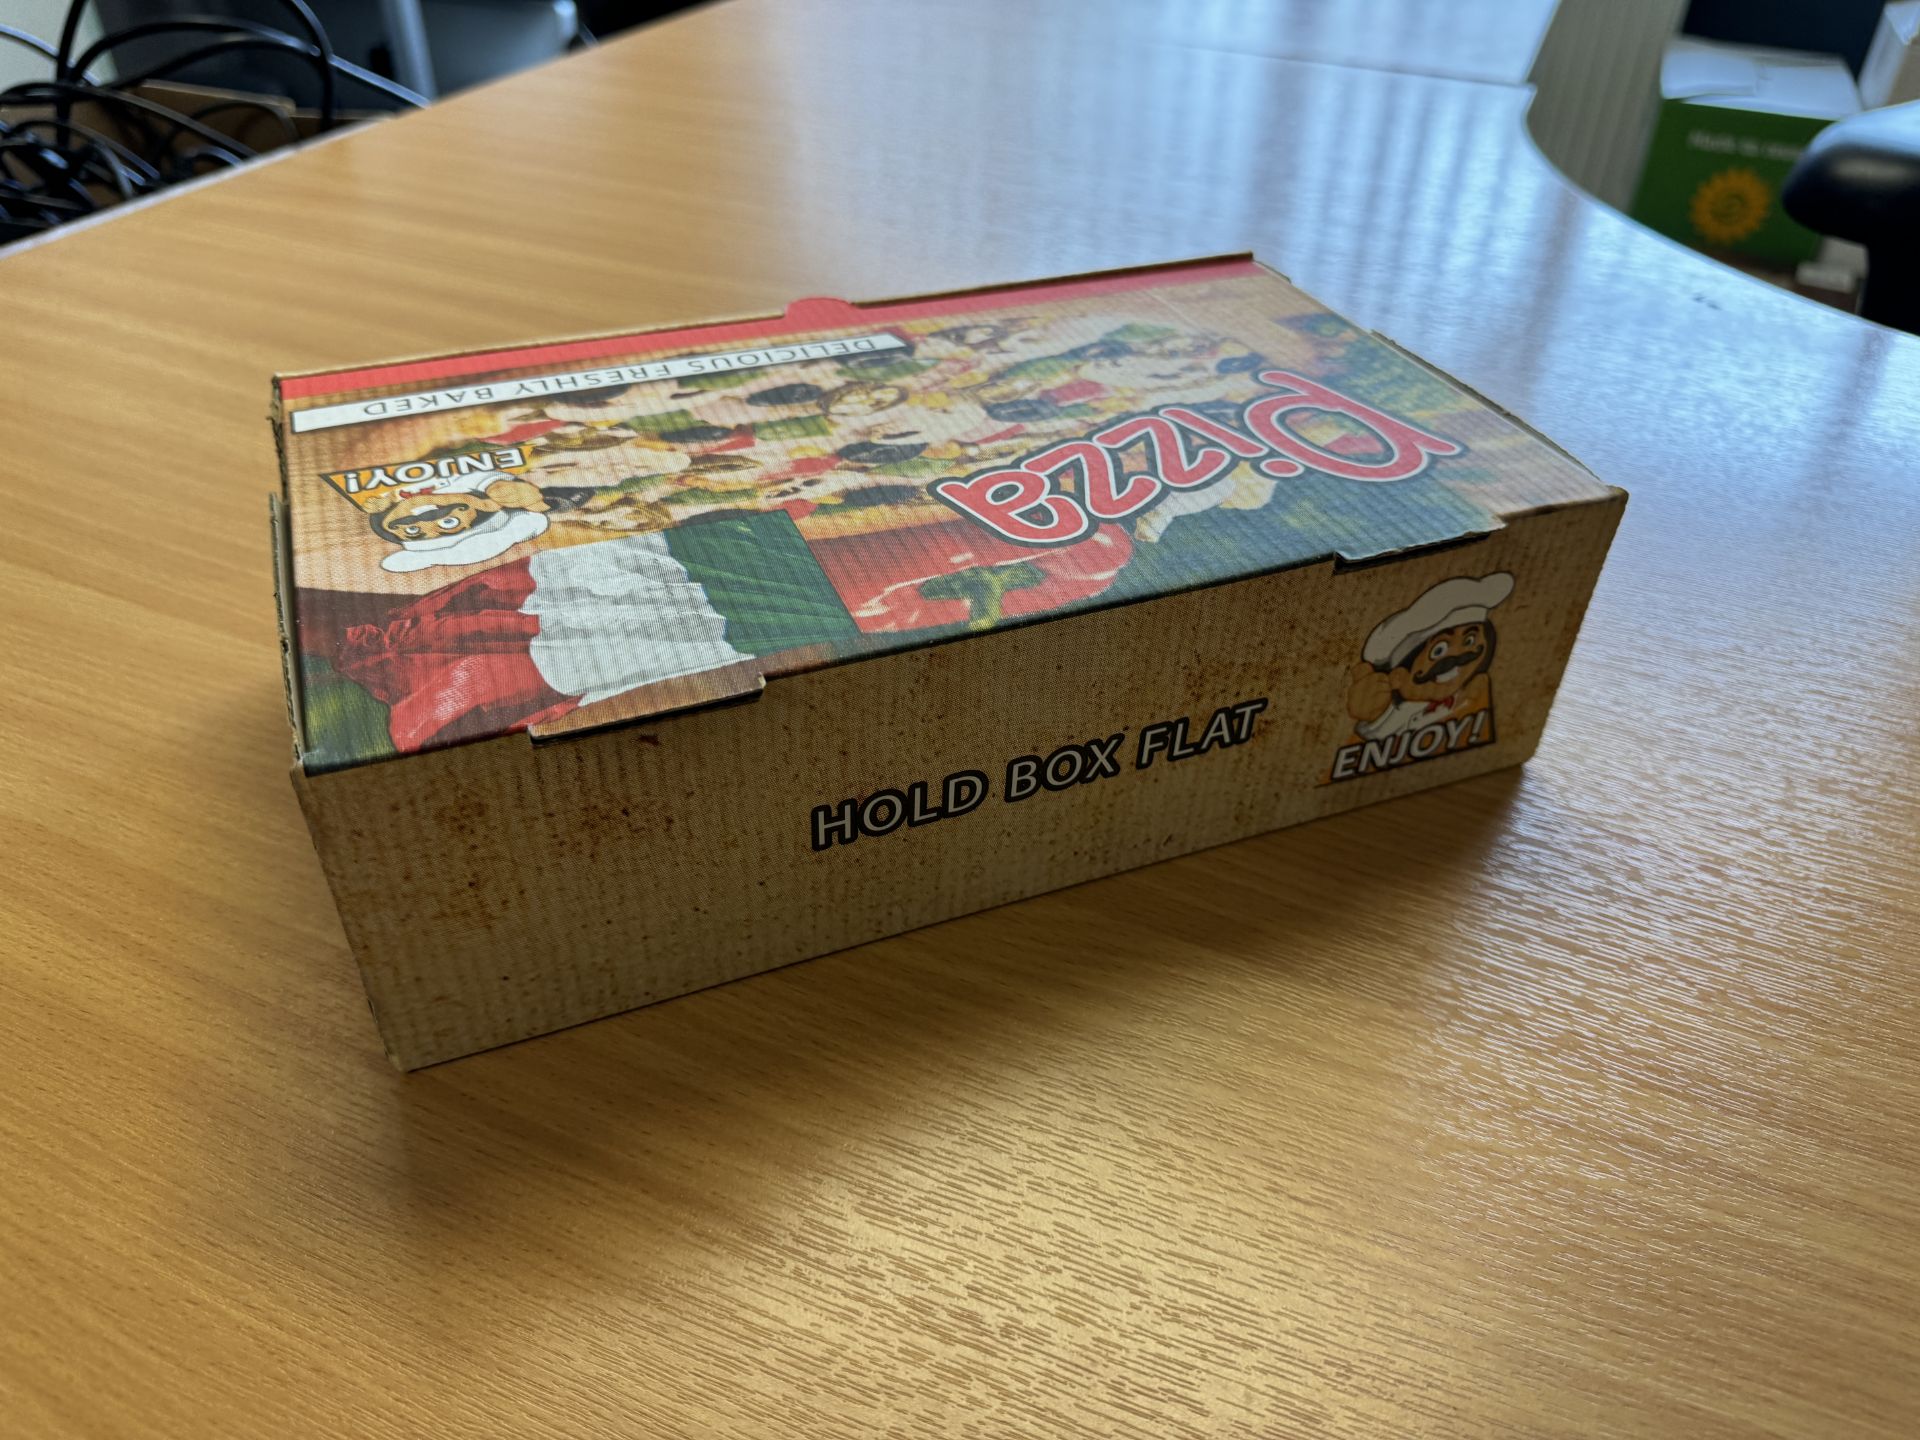 Circa 900 - Enjoy Calzone Boxes (Cardboard) - Multiple Uses RRP £130 - Bild 4 aus 12